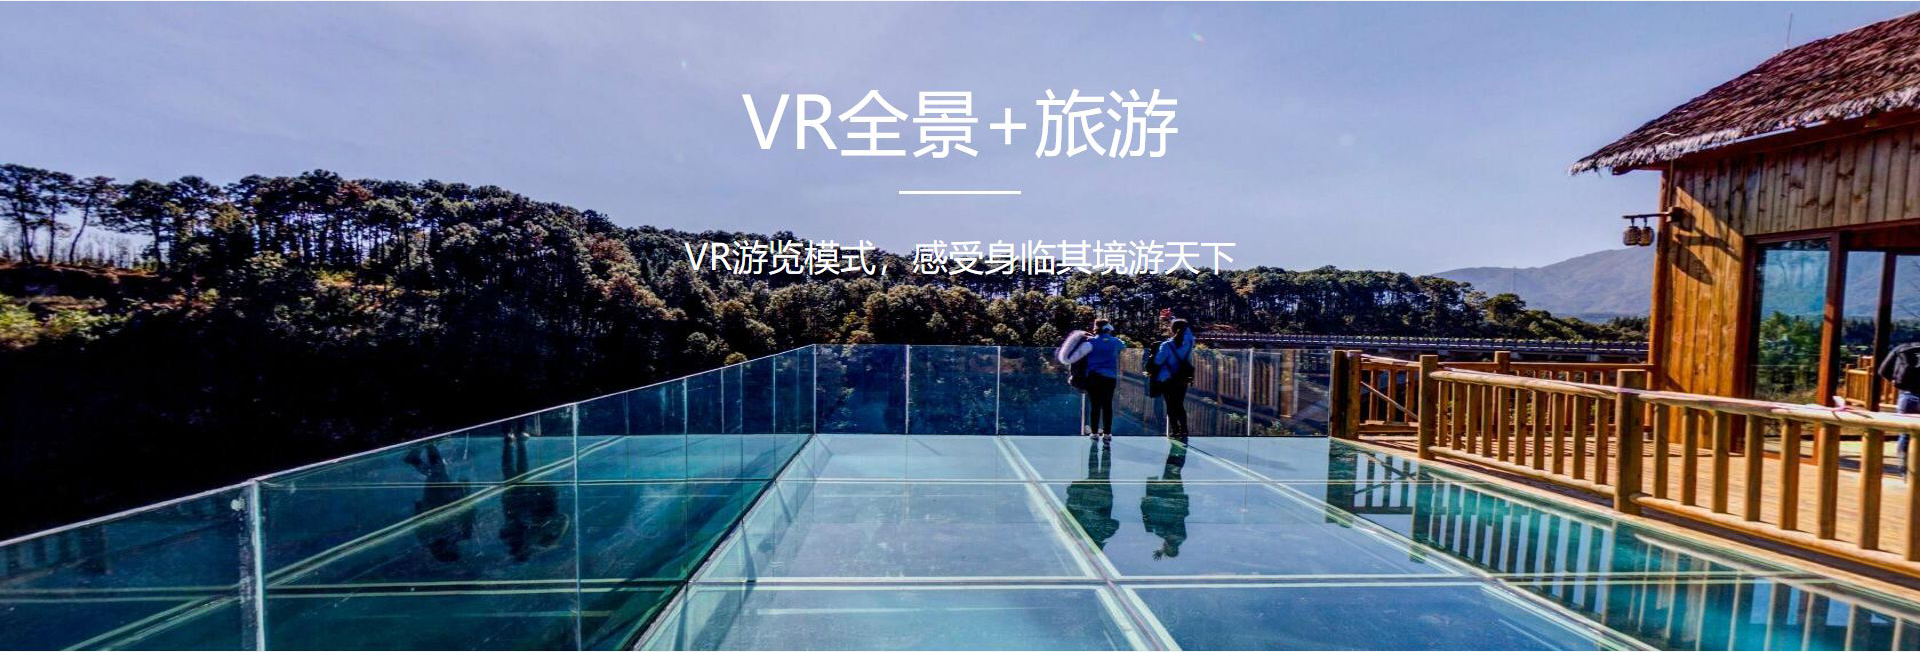 VR全景拍摄